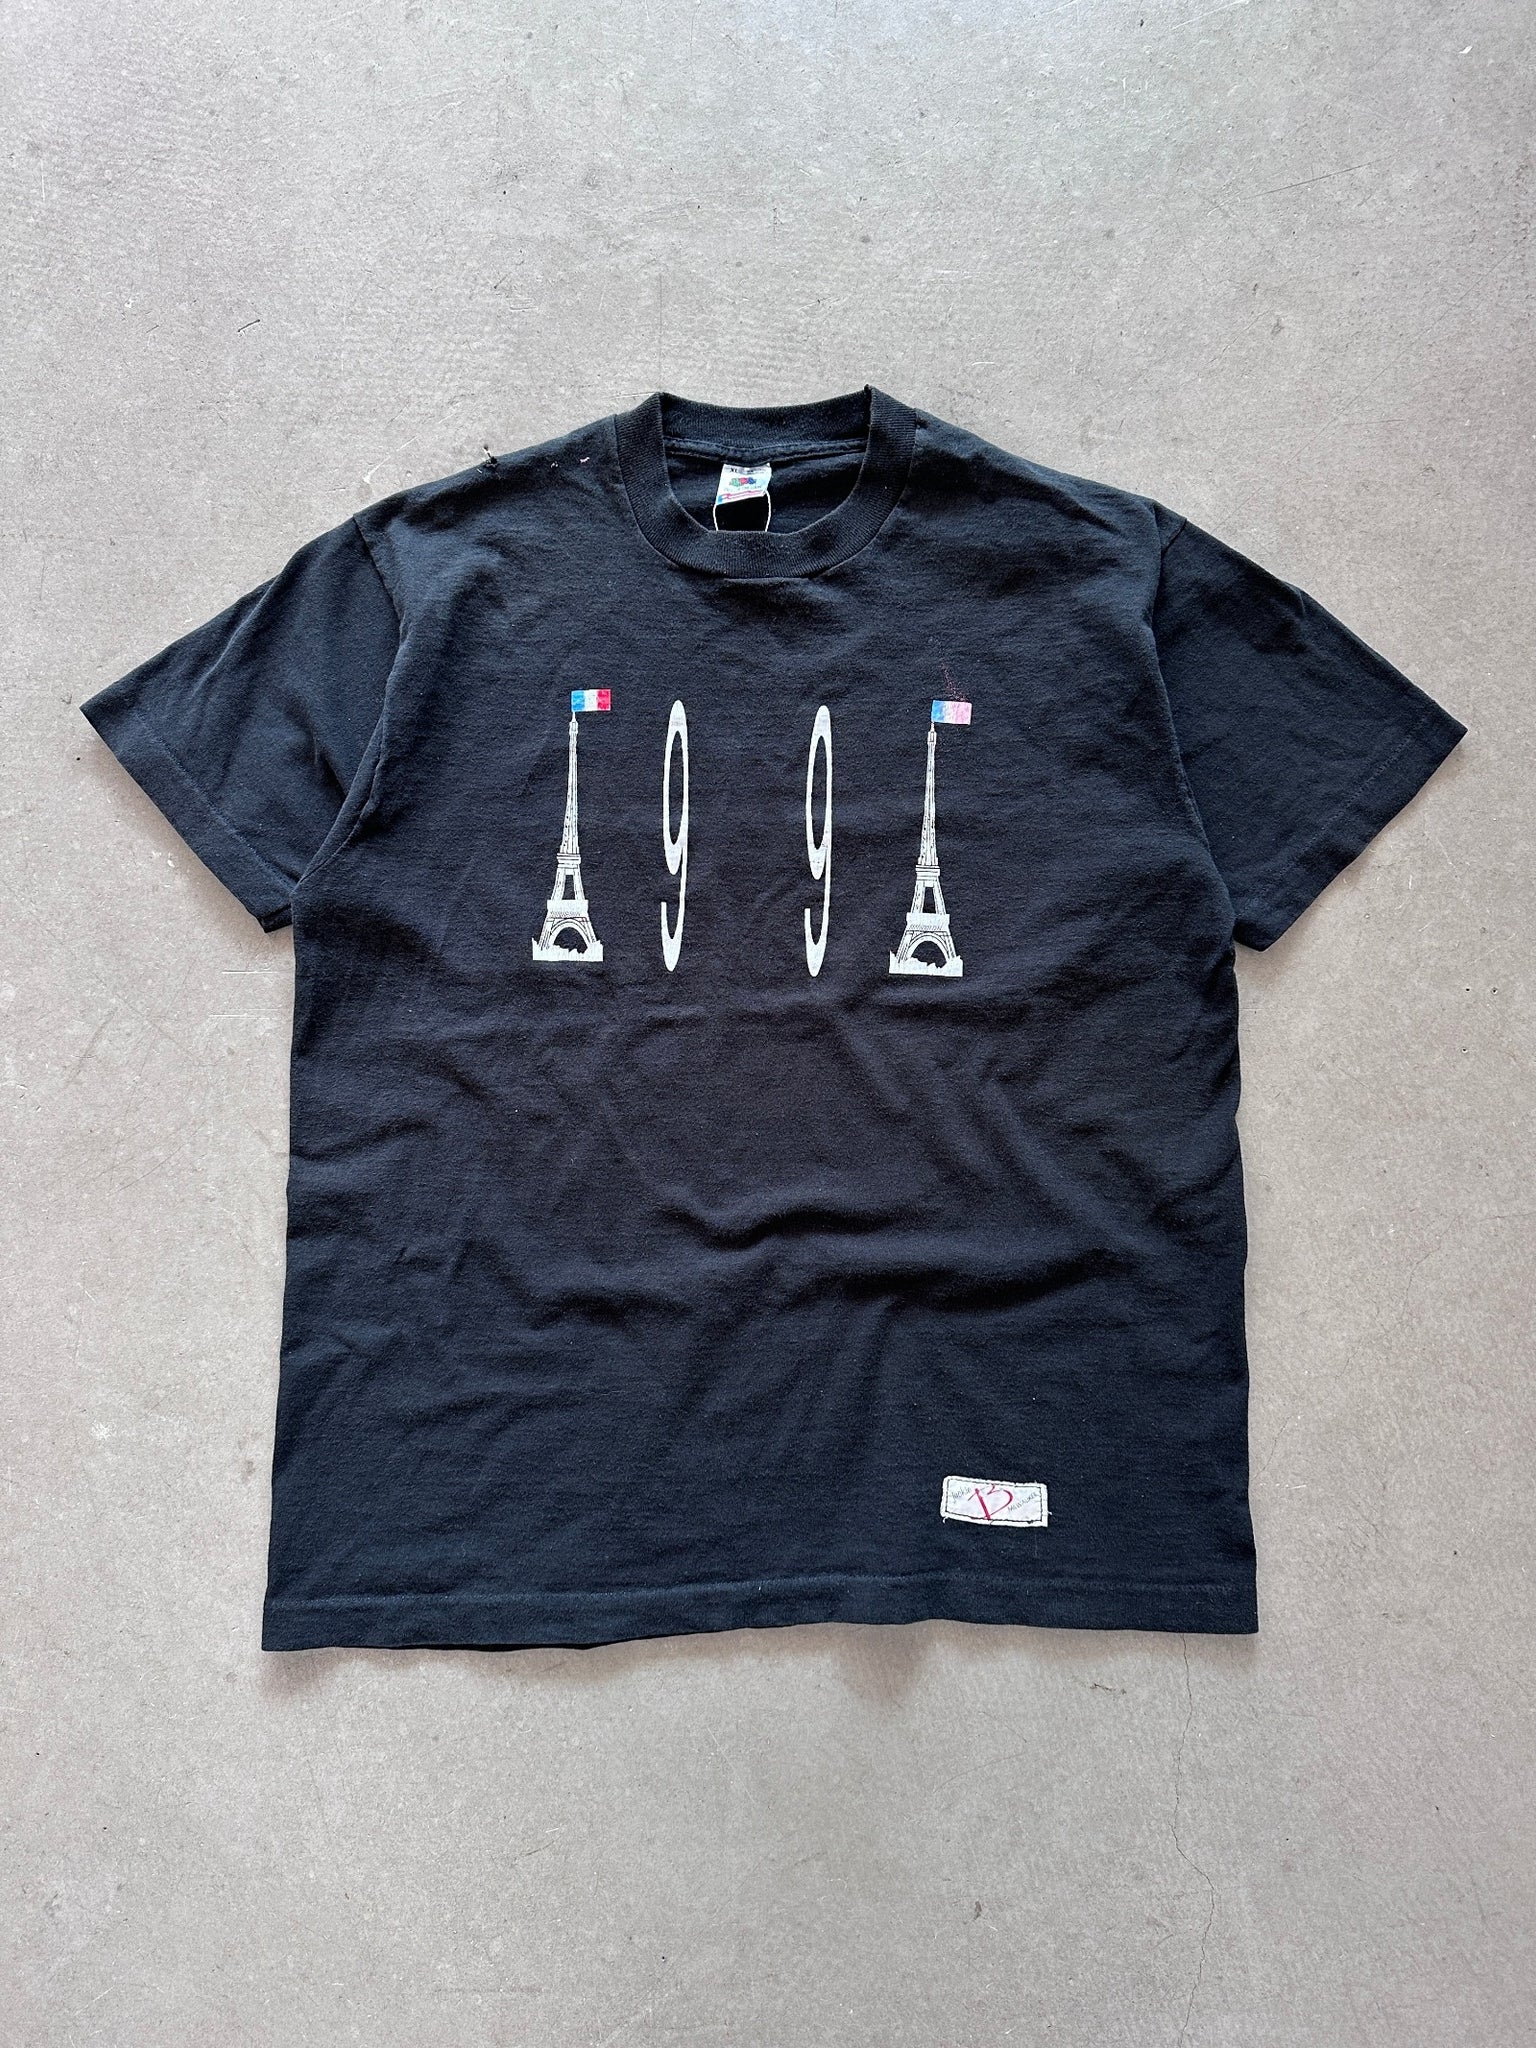 1991 Paris NYE Party T-Shirt - XL